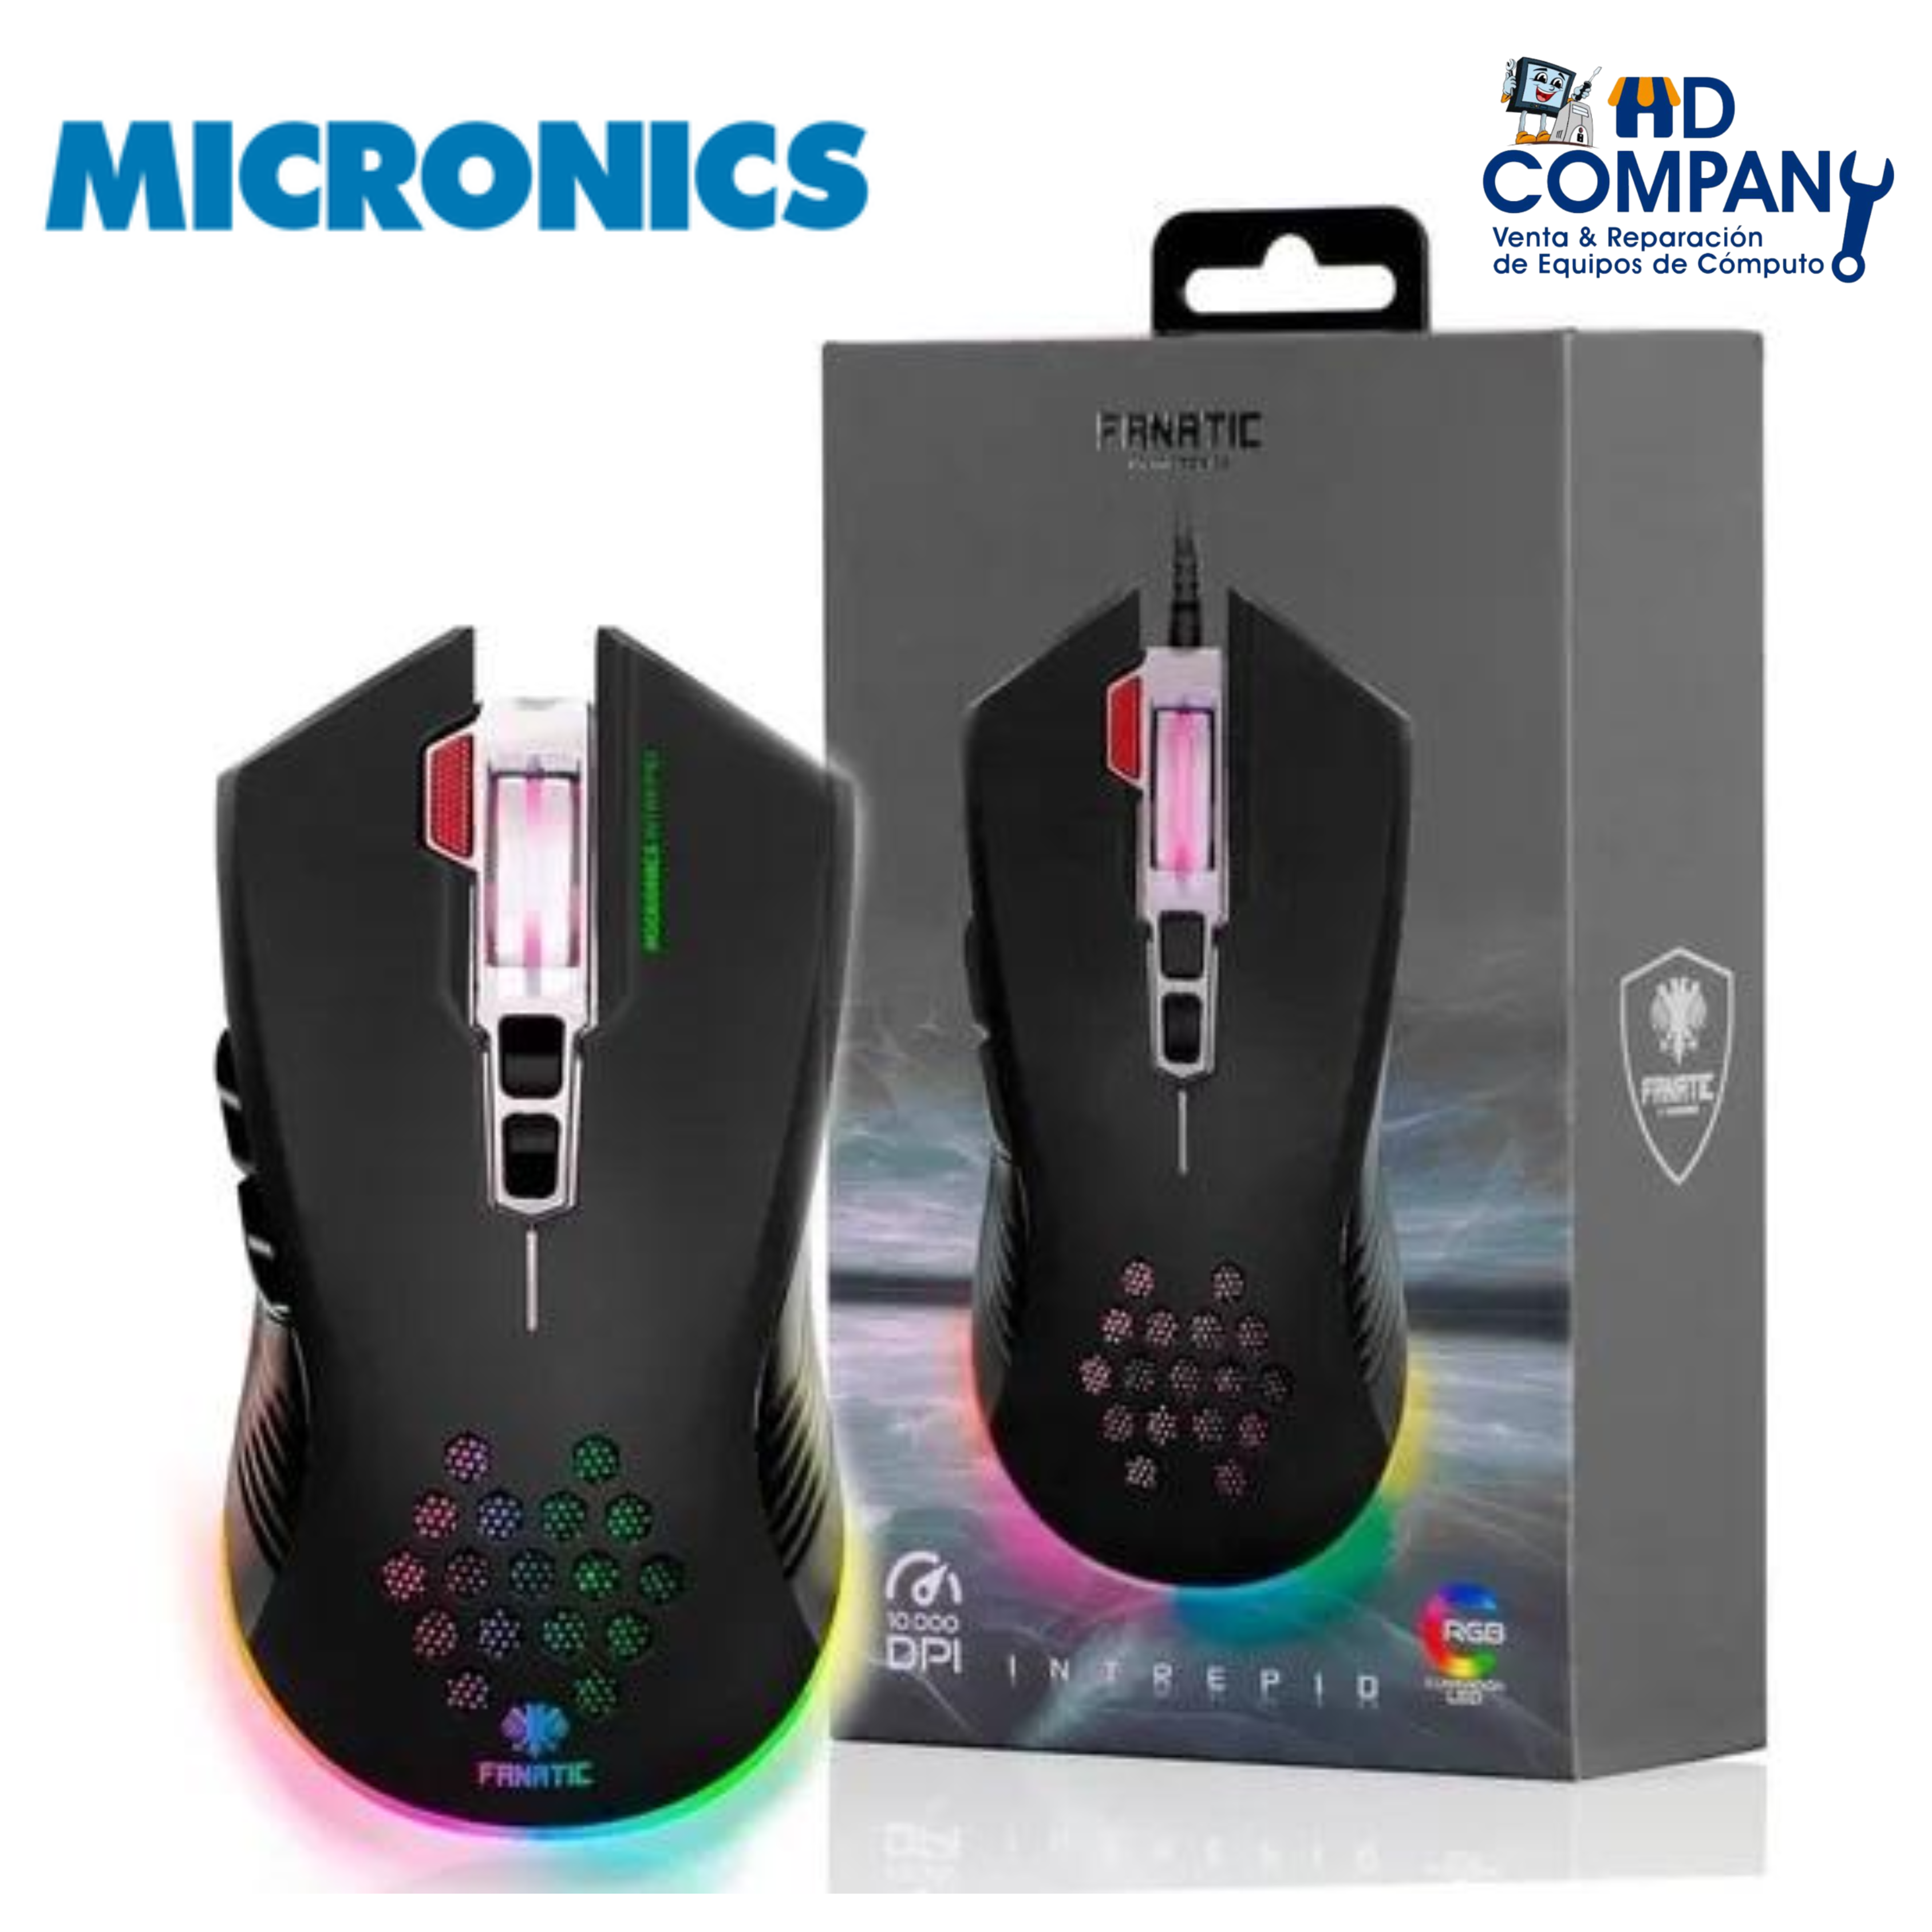 Mouse MICRONICS intrepid fanatic MIC GM 8001 gamer